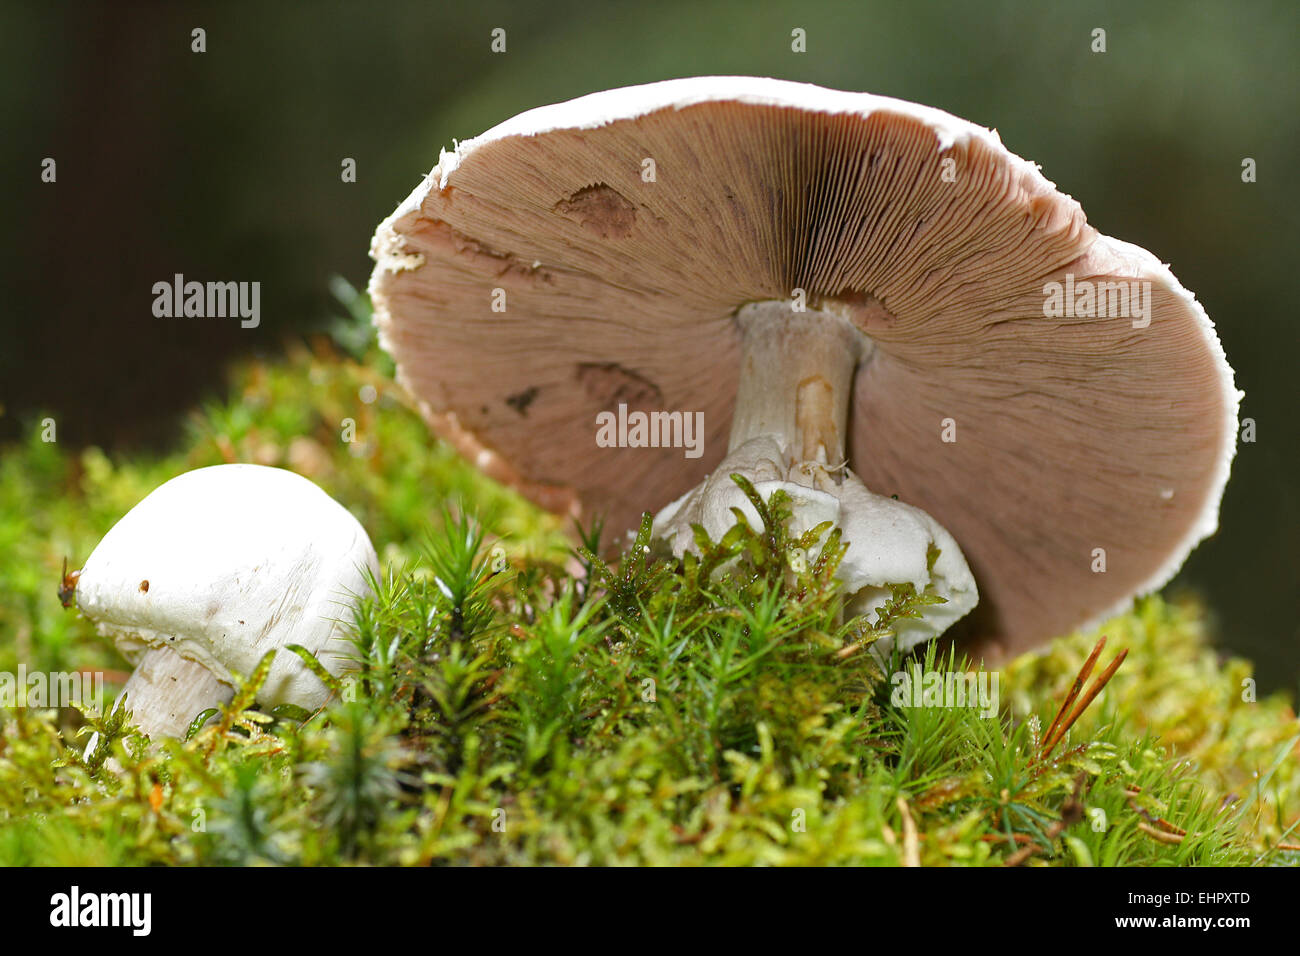 horse mushroom Stock Photo